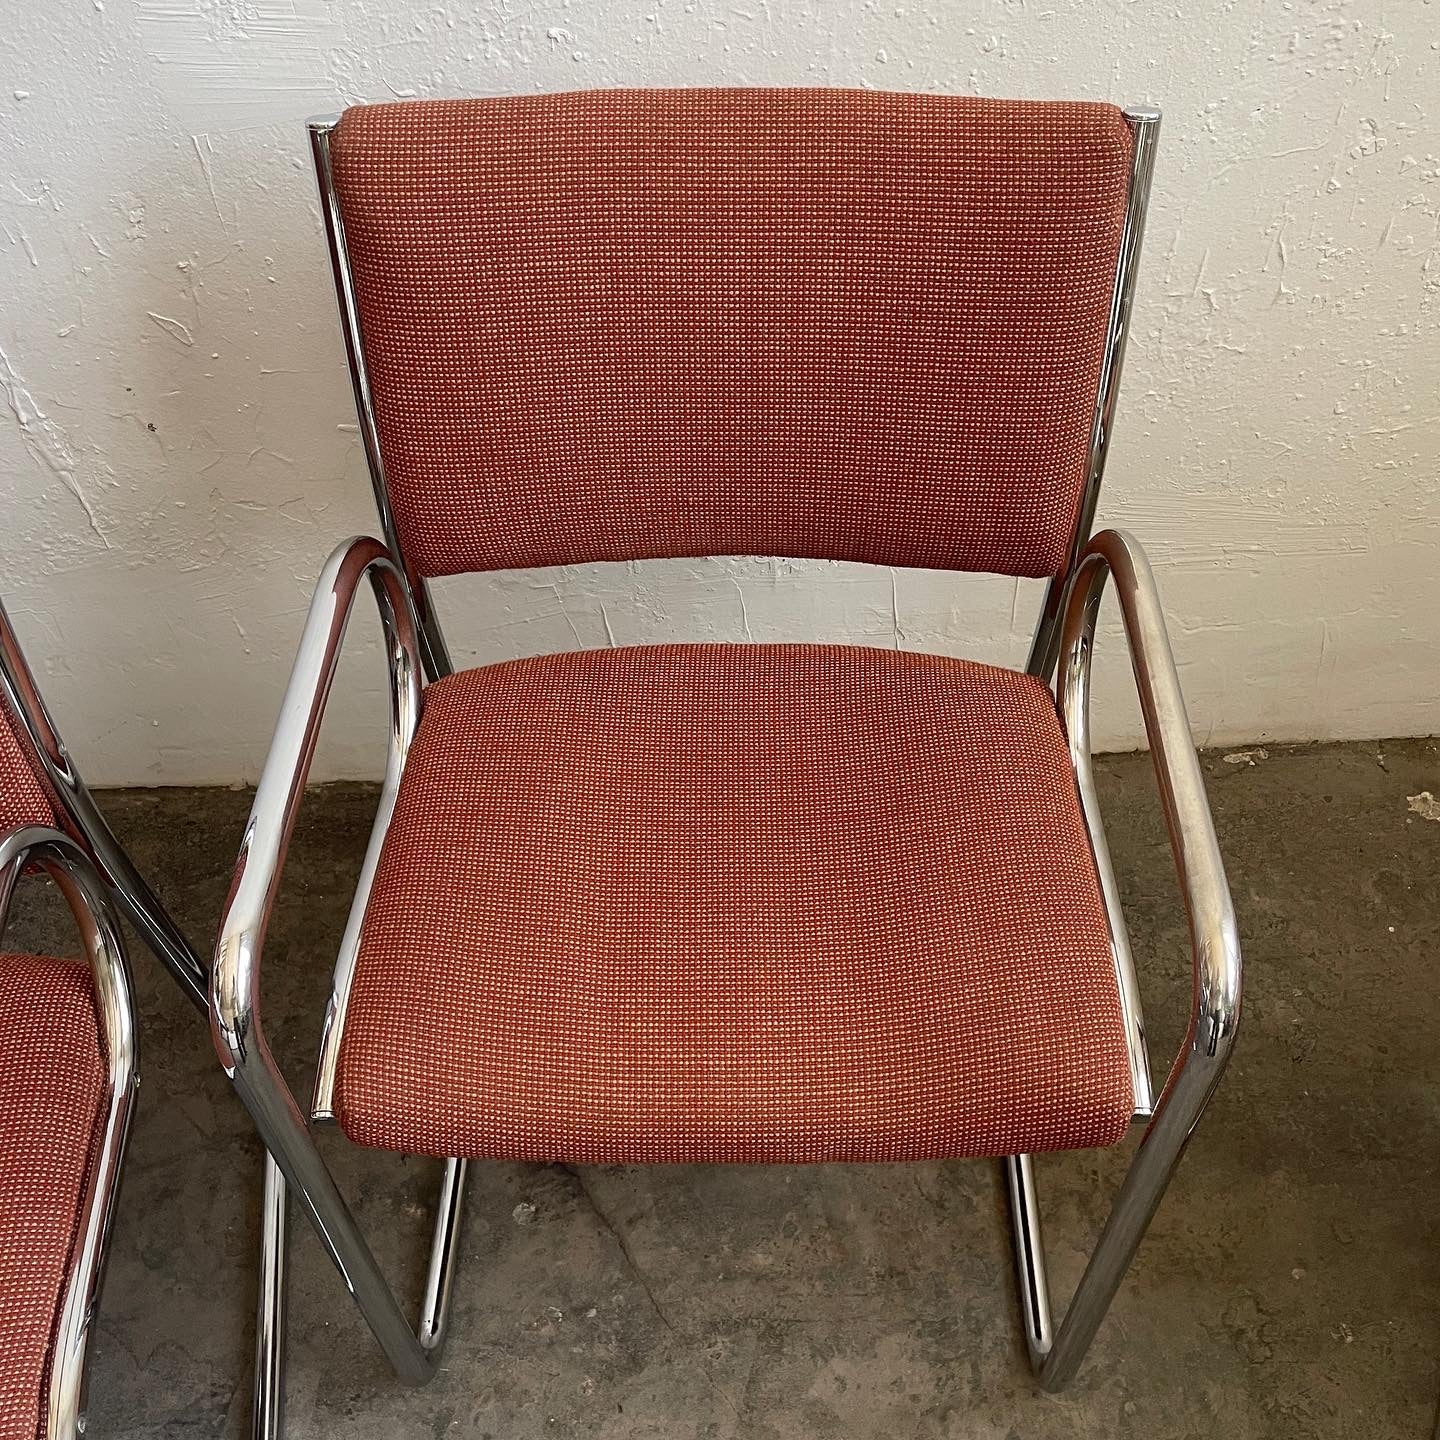 Vecta Tubular Chrome Chairs (Priced Individually)